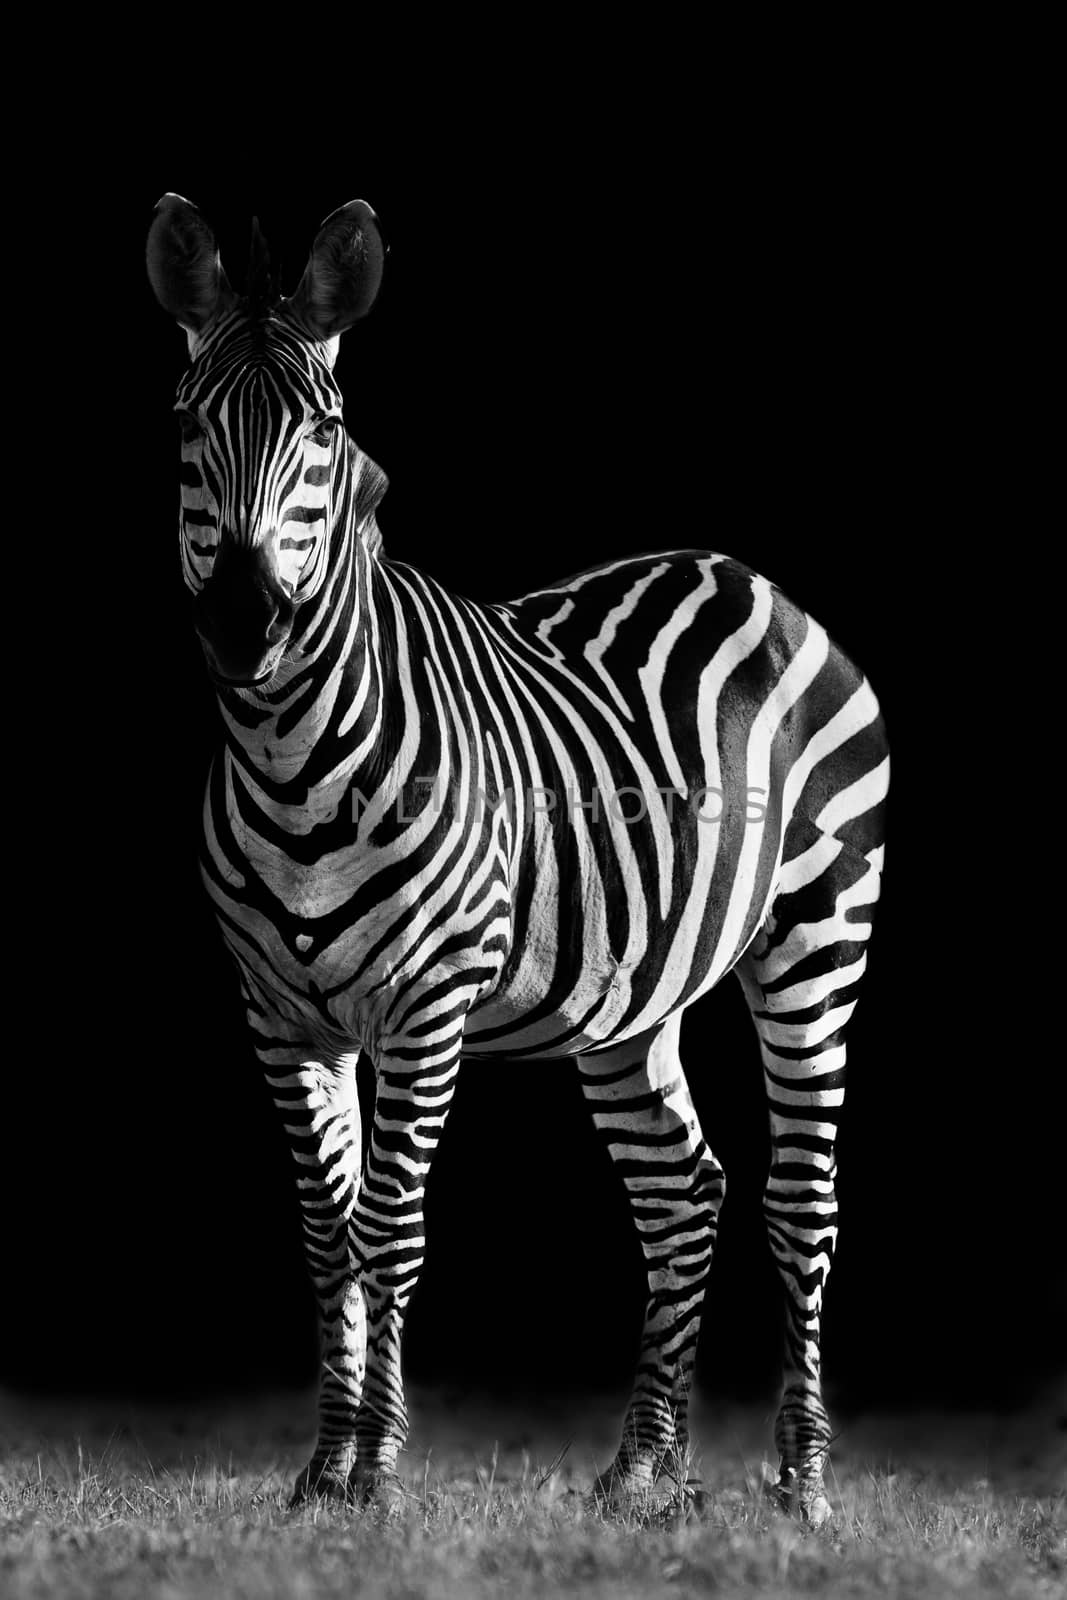 Creative black and white image of a Zebra